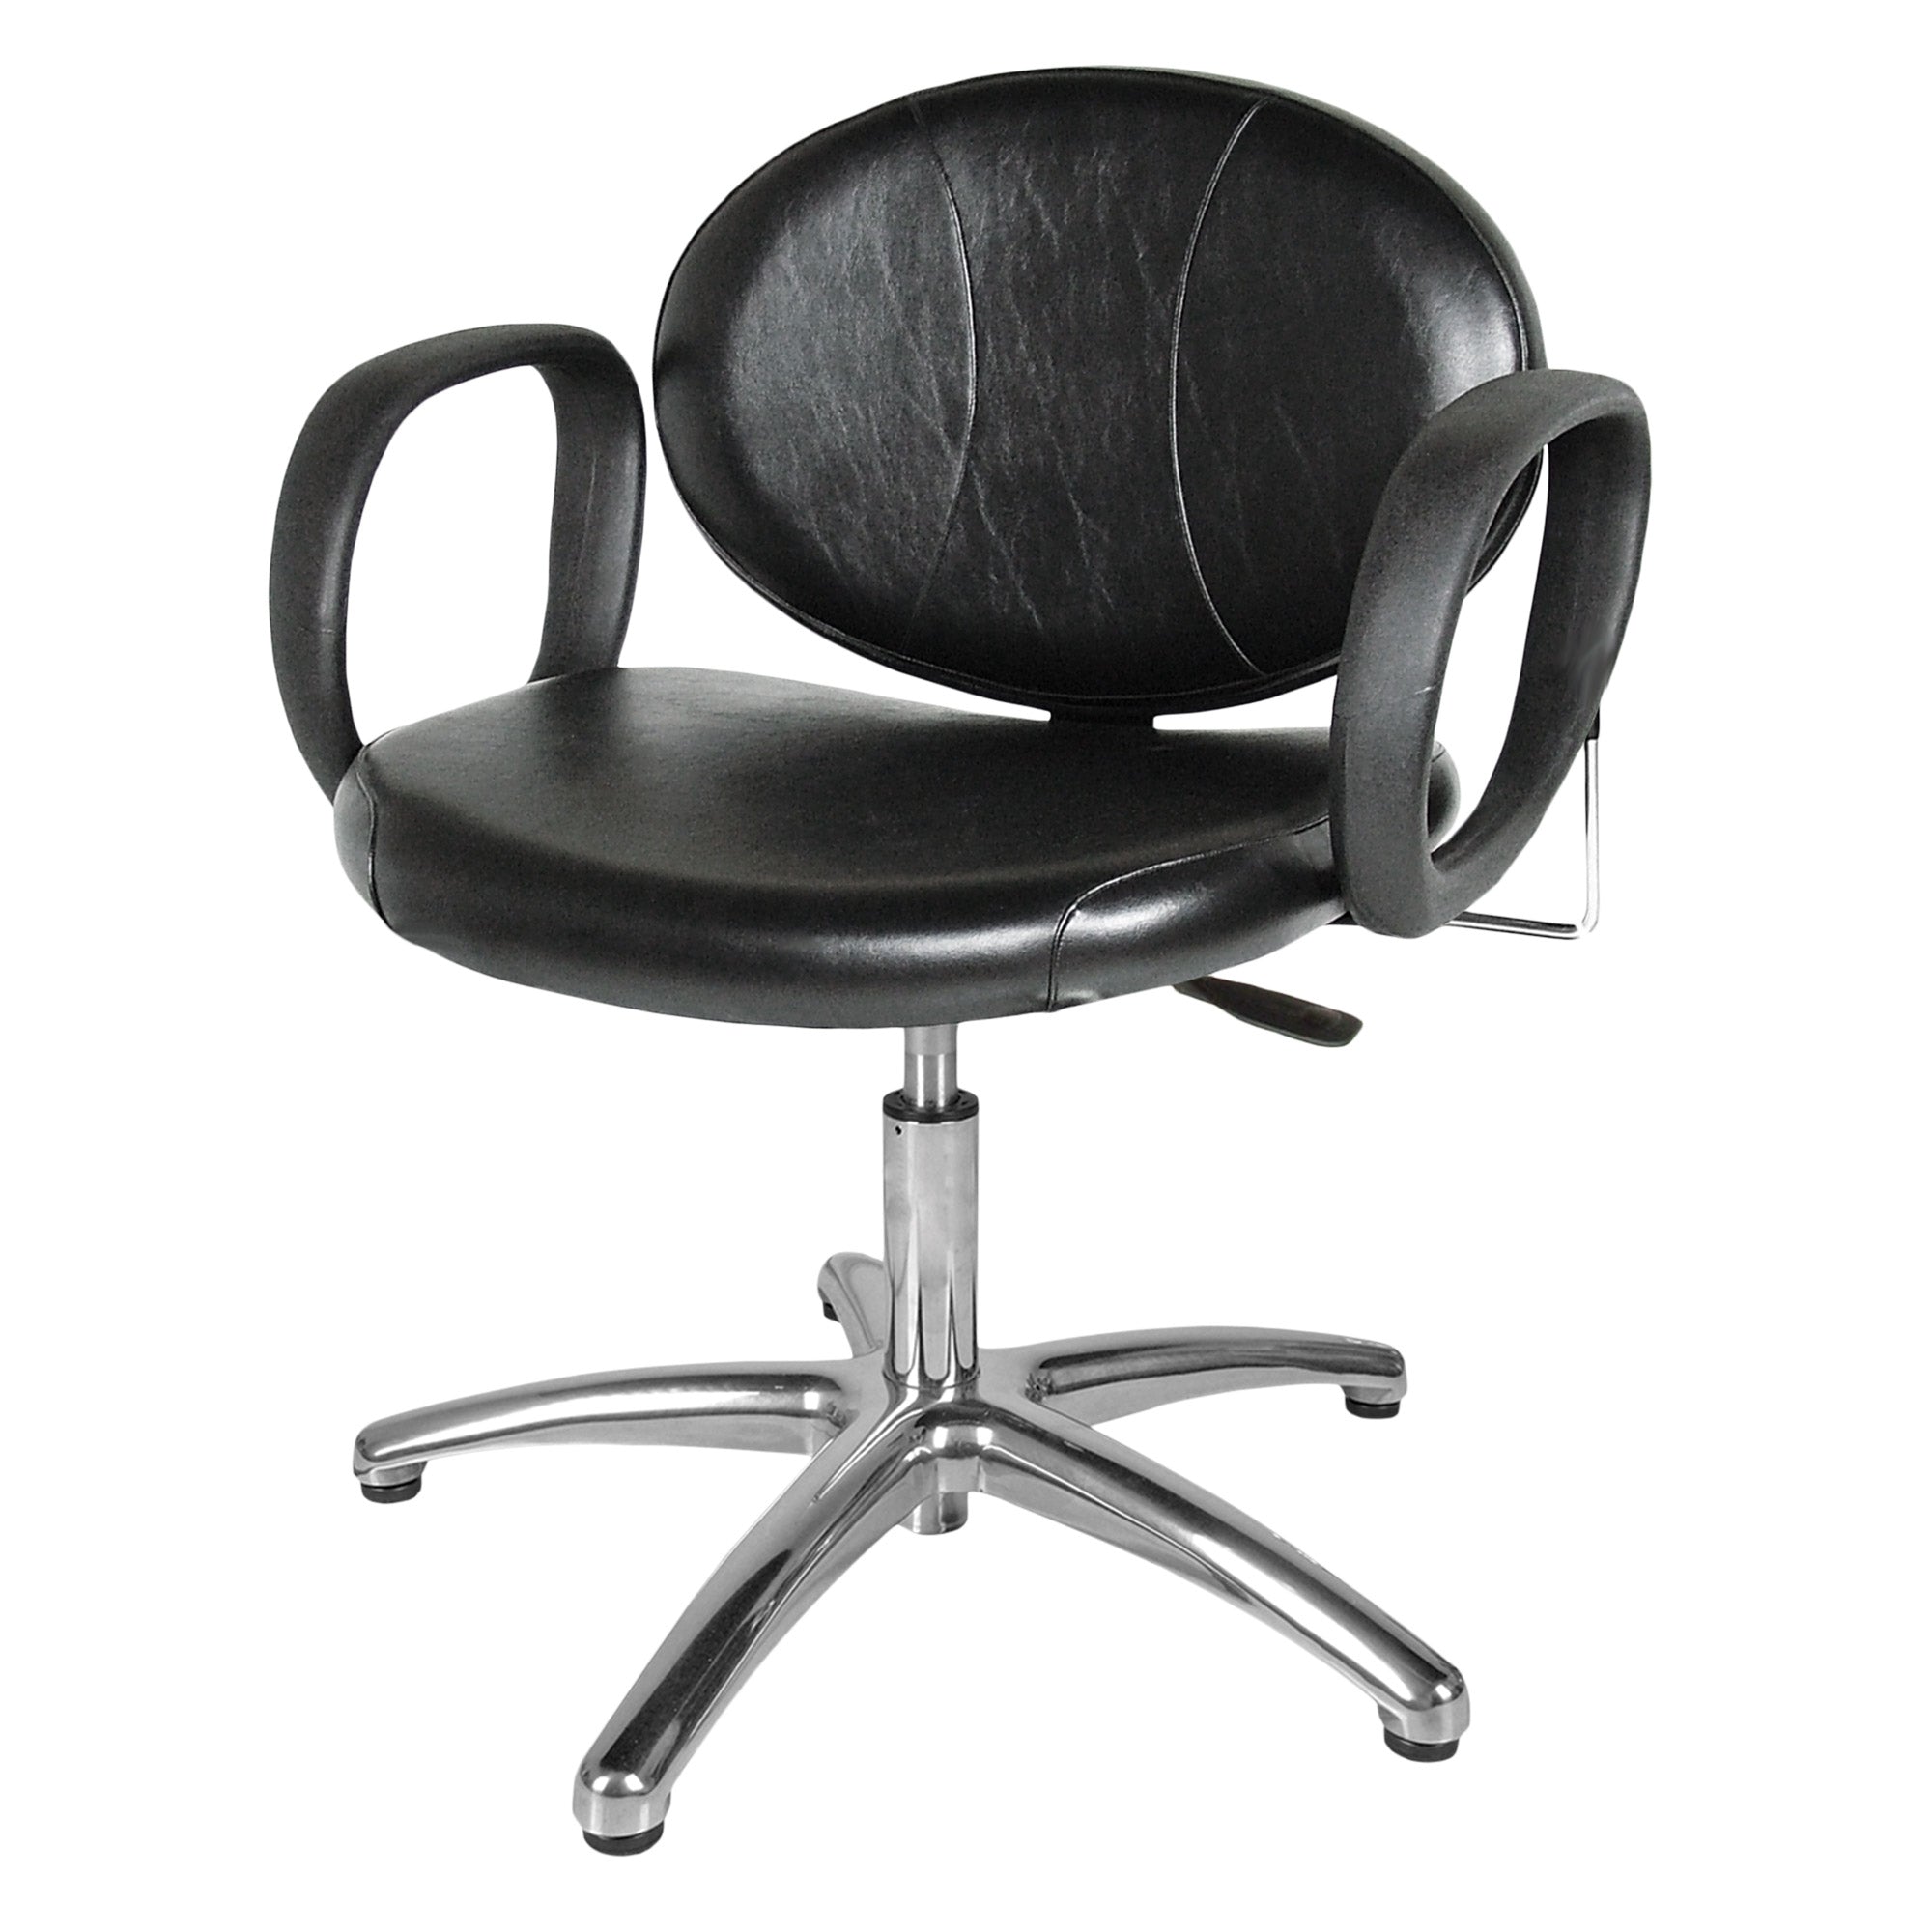 Berra Lever-Control Shampoo Chair - Collins